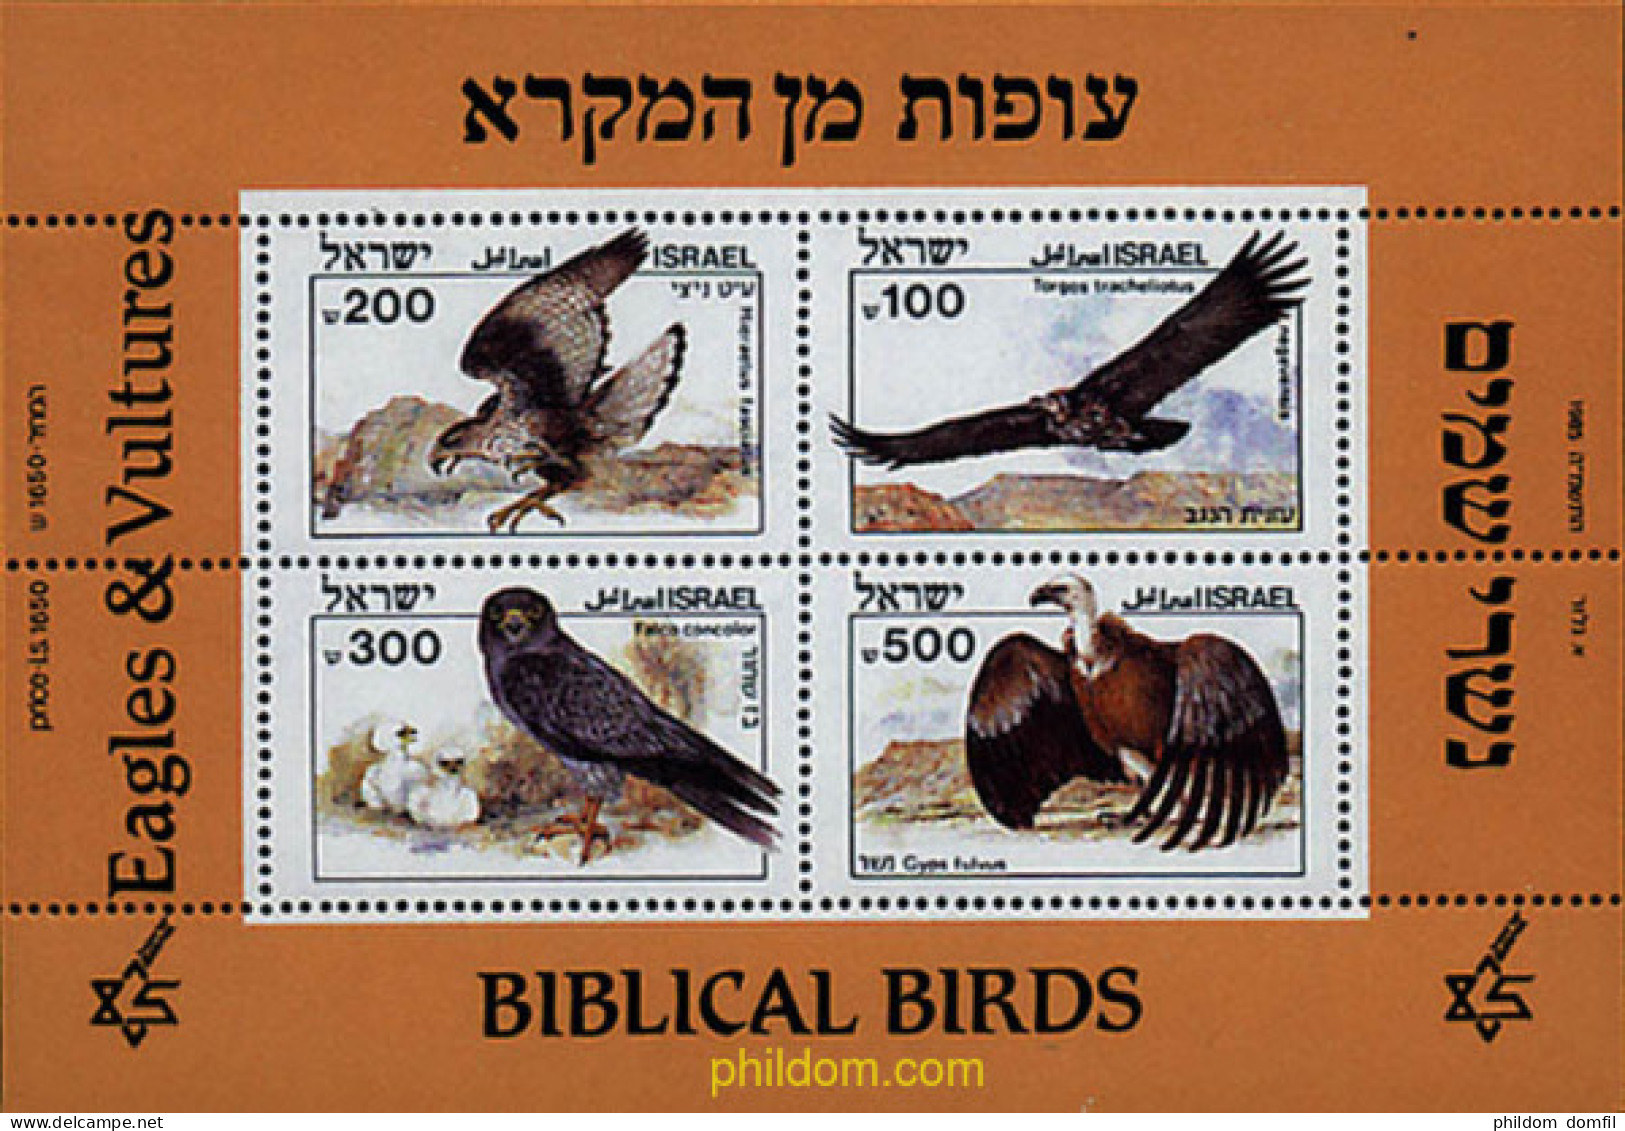 31508 MNH ISRAEL 1985 AVES DE LA BIBLIA - Ungebraucht (ohne Tabs)